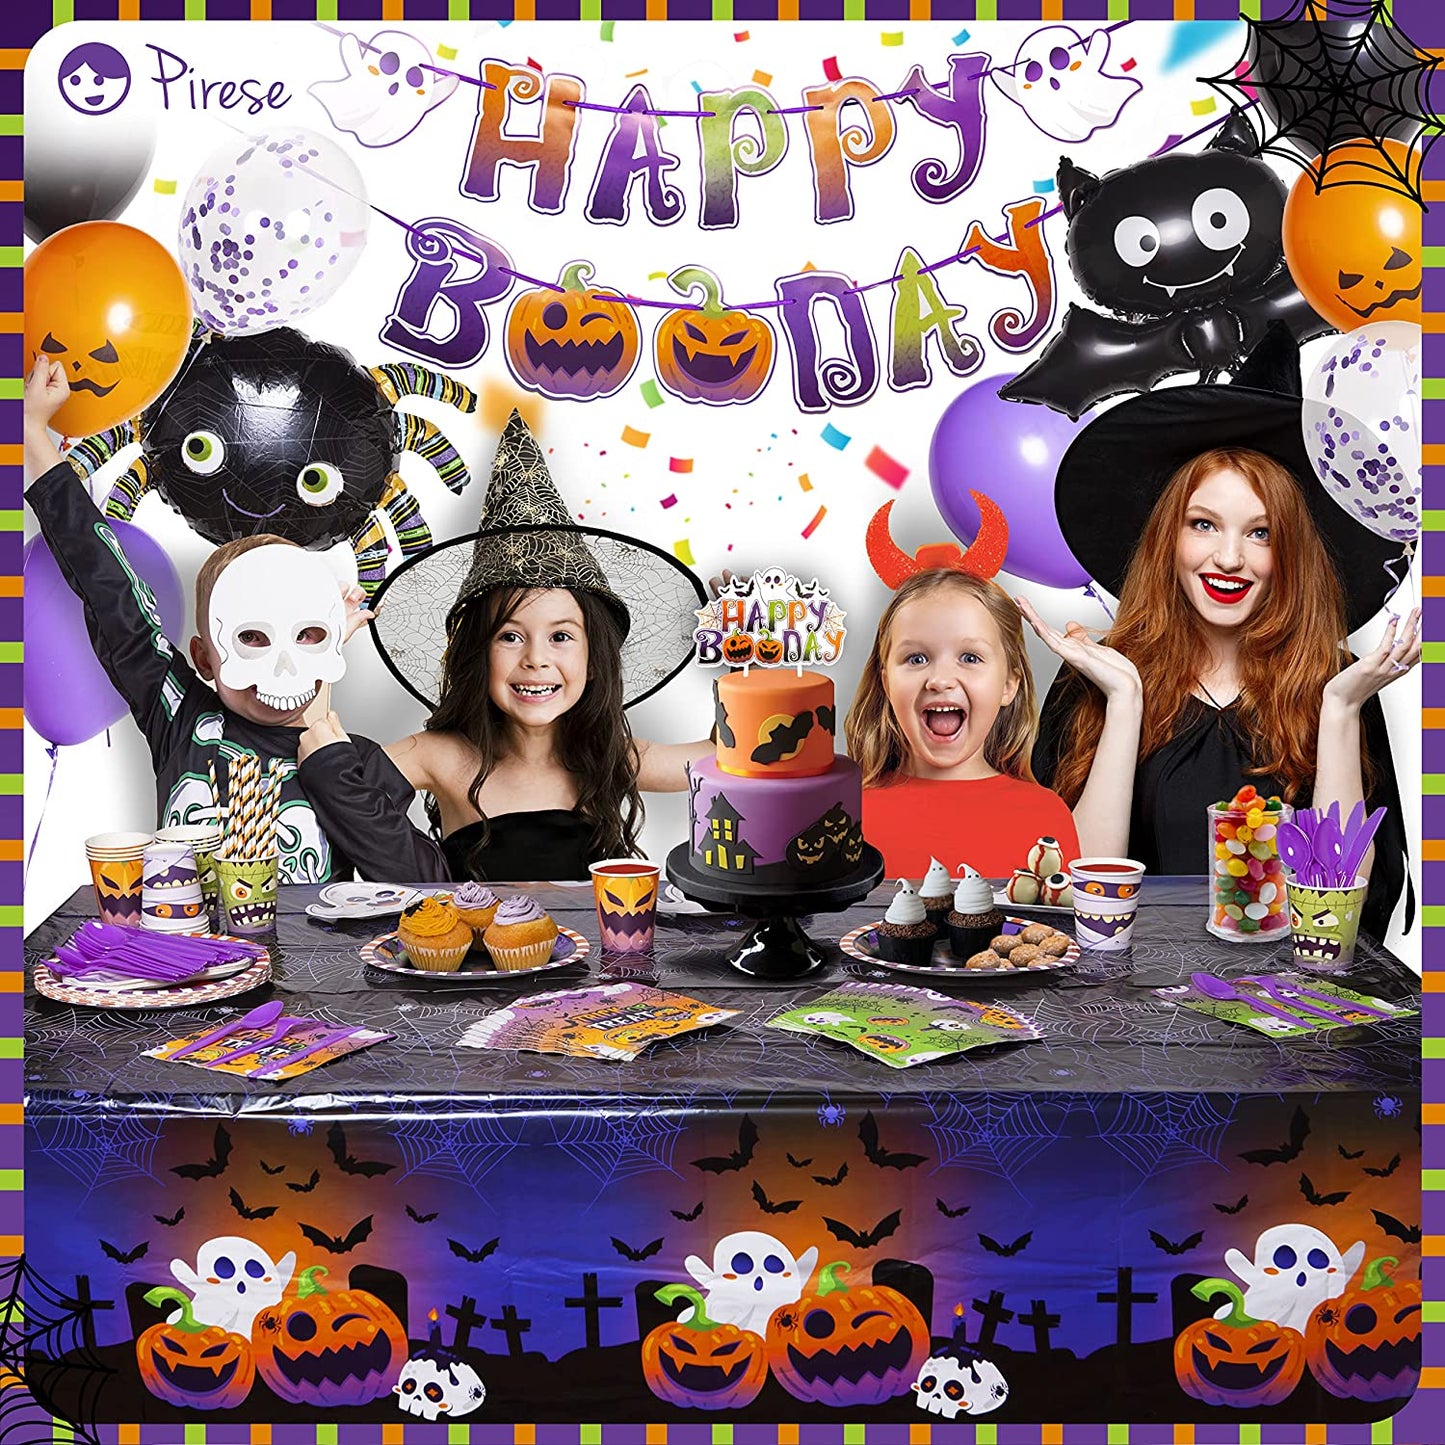 Pirese Halloween Birthday Party Decorations